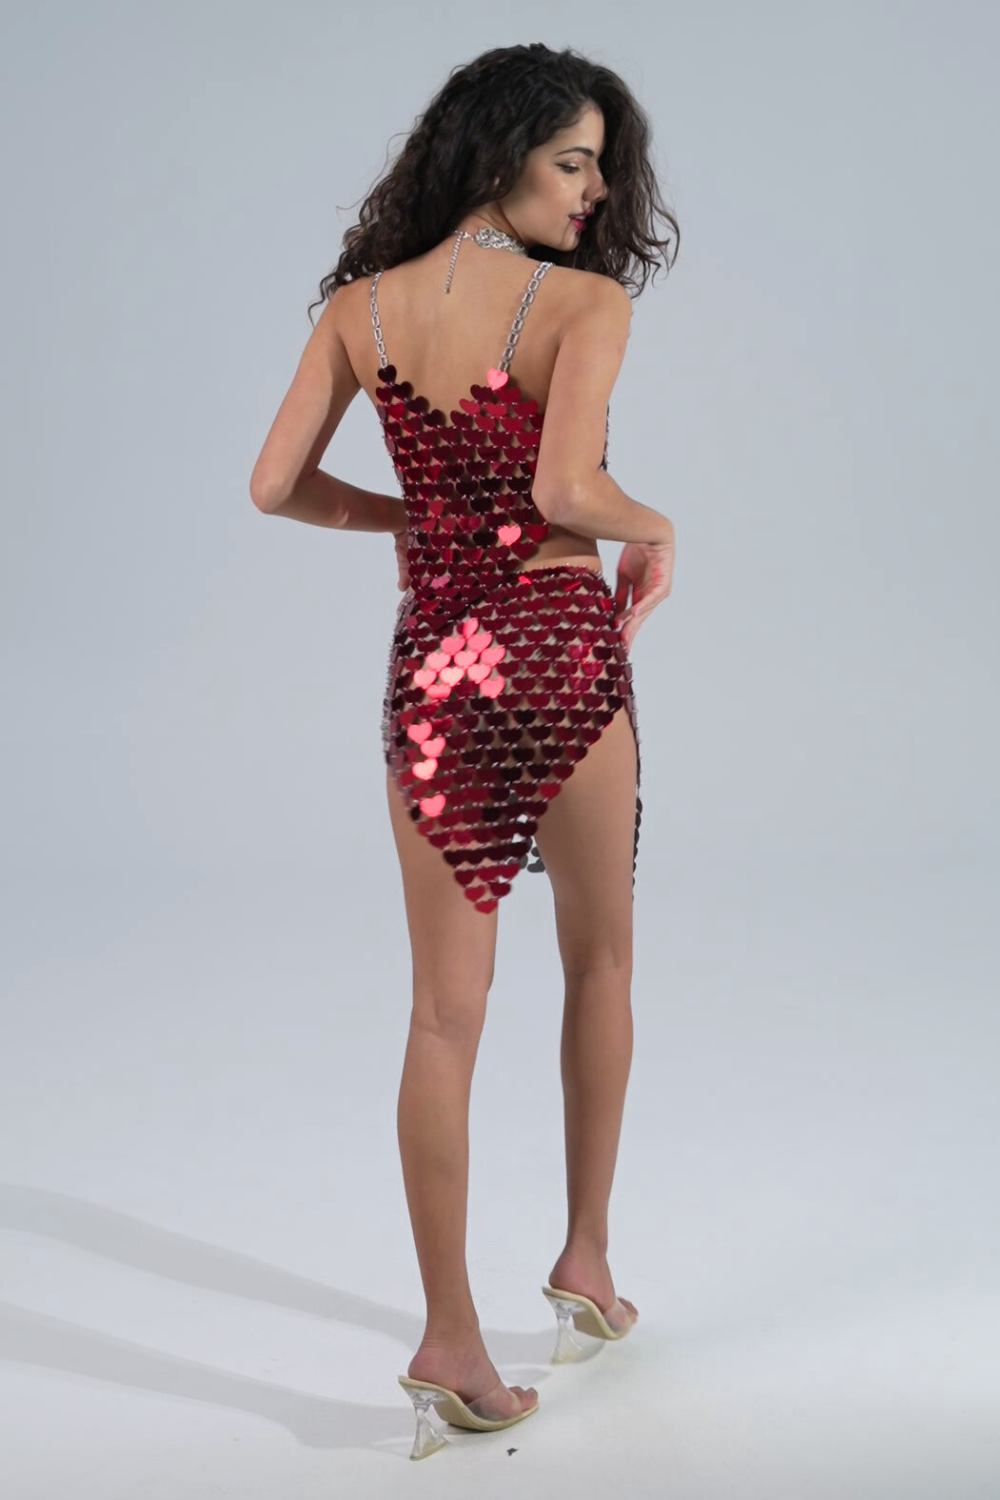 Heart Shaped Cami & Skirt Set